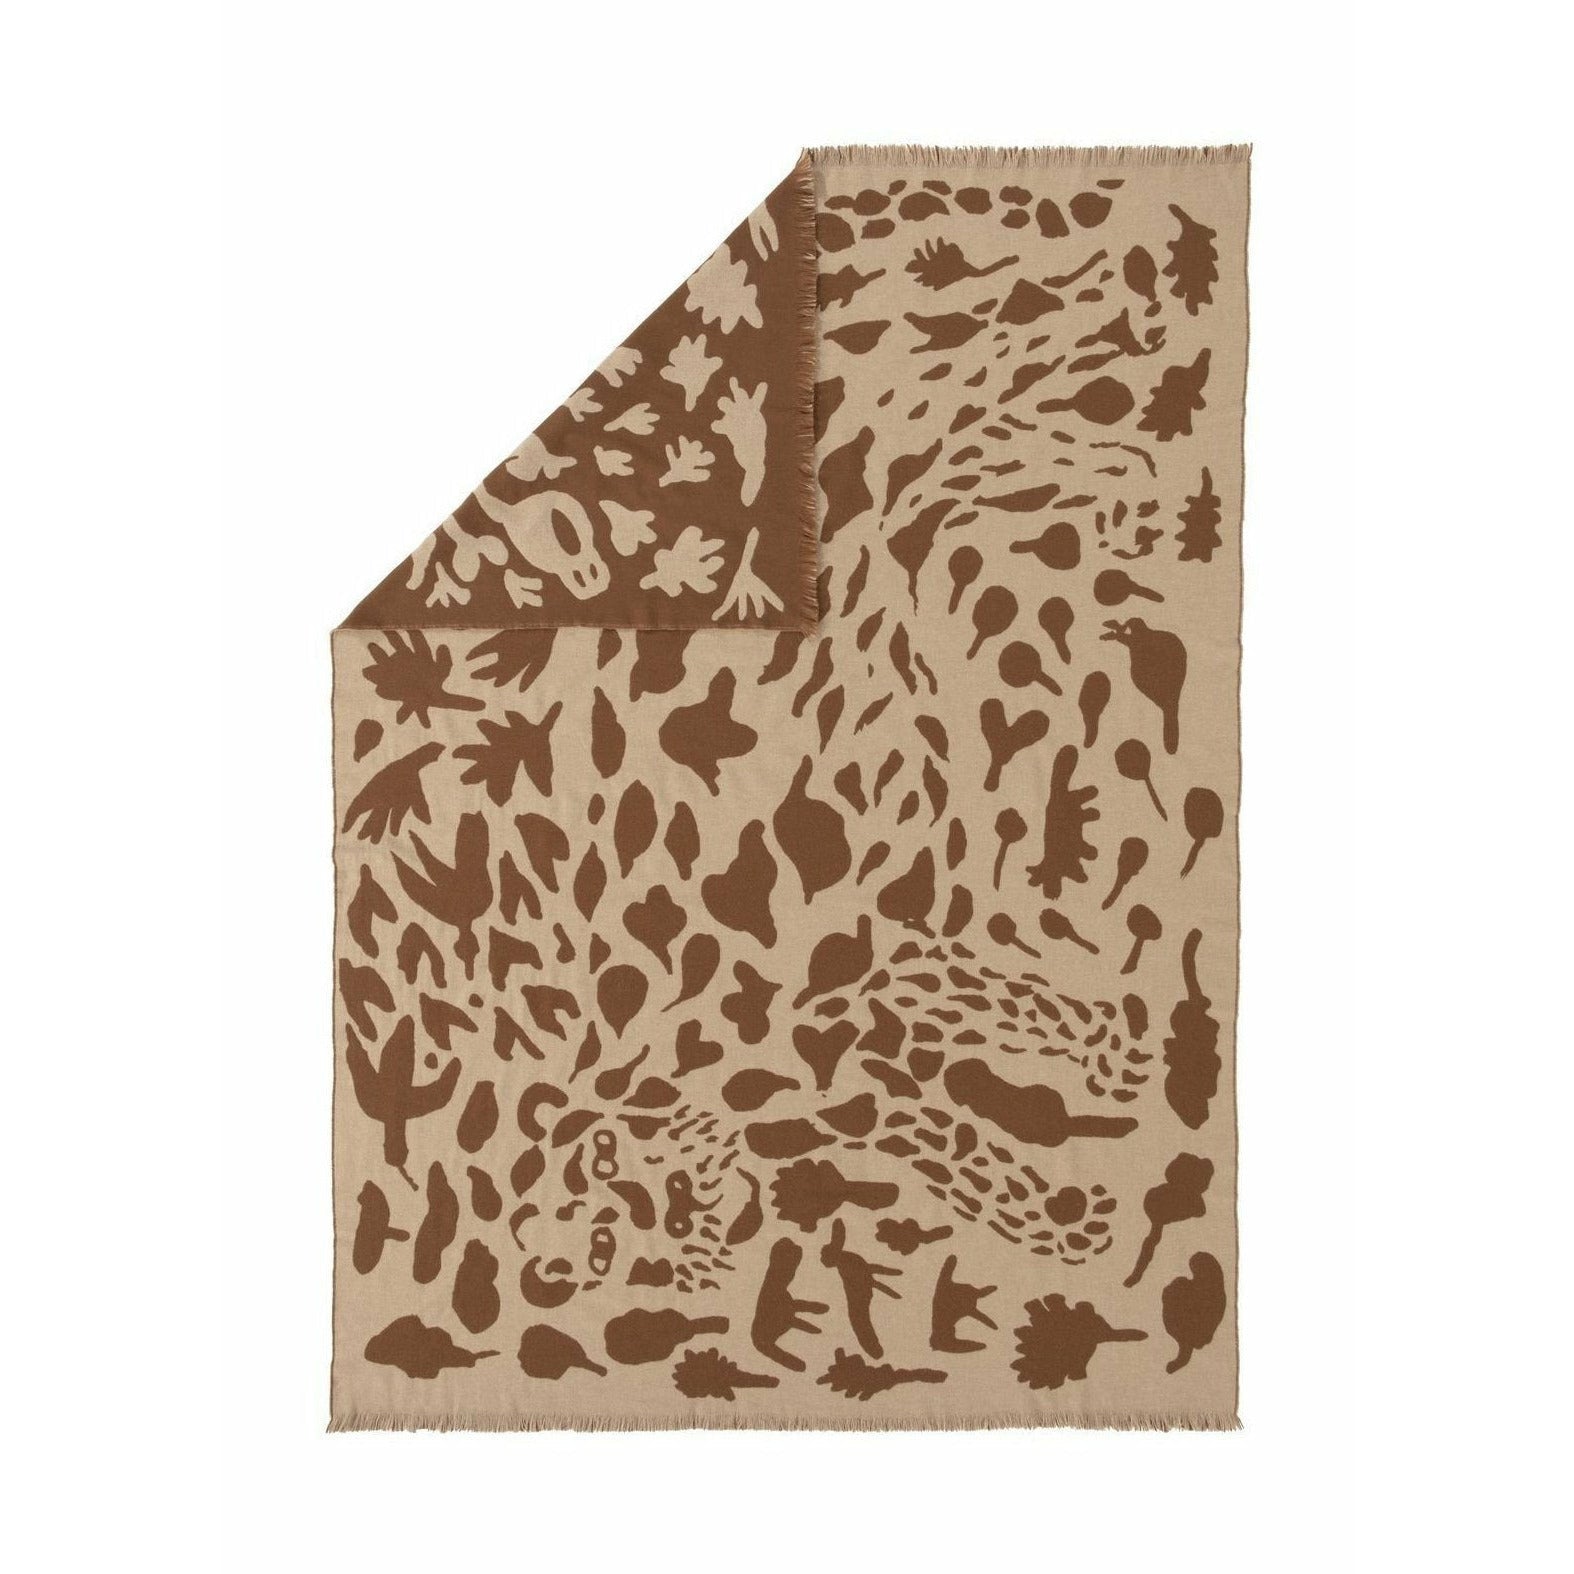 Iittala Oiva Toikka Blanket Cheetah Brown, 180x130cm